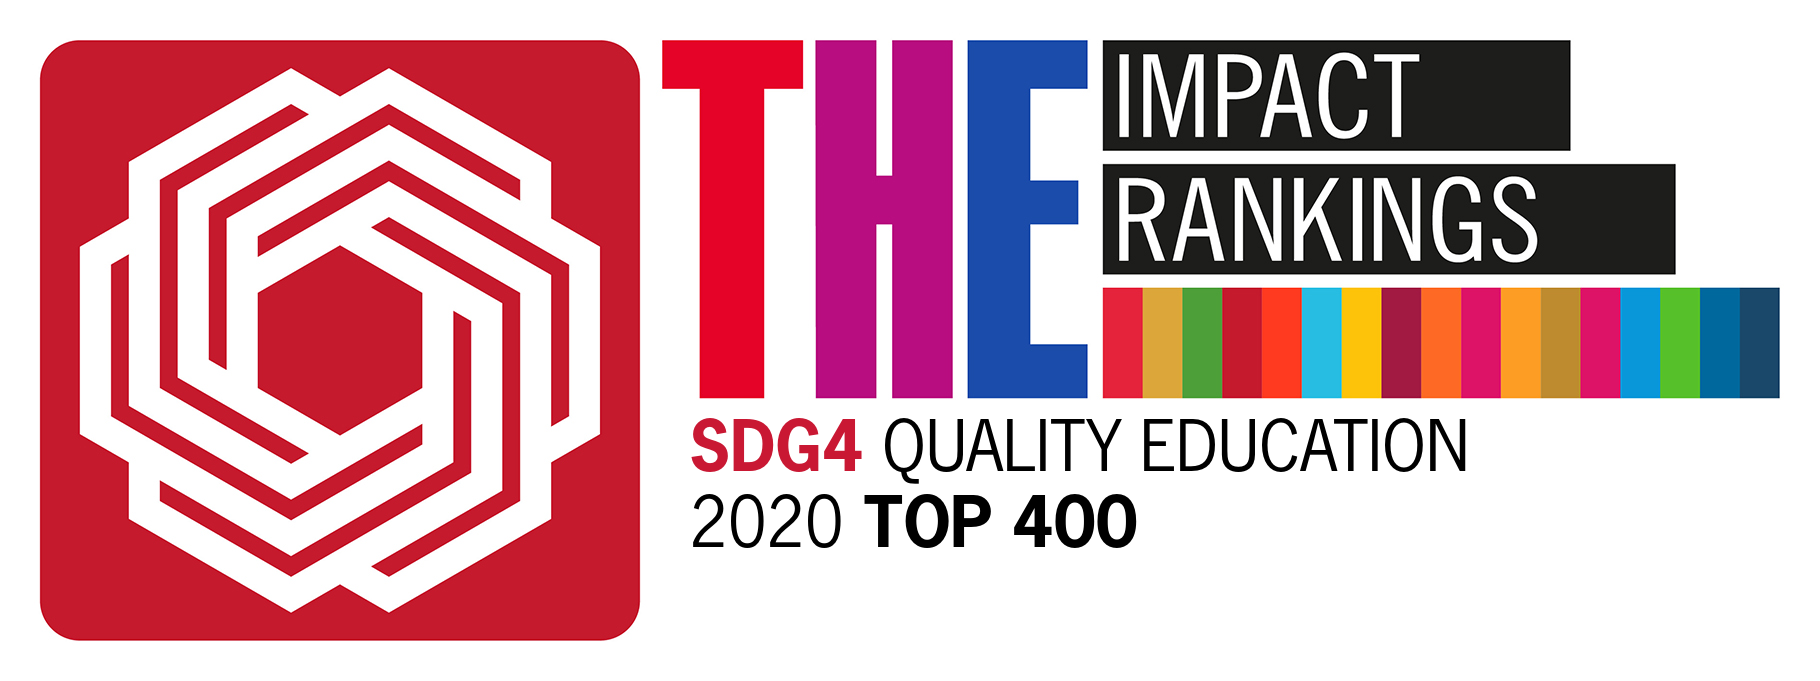 SDG4_ Quality Education Top 400